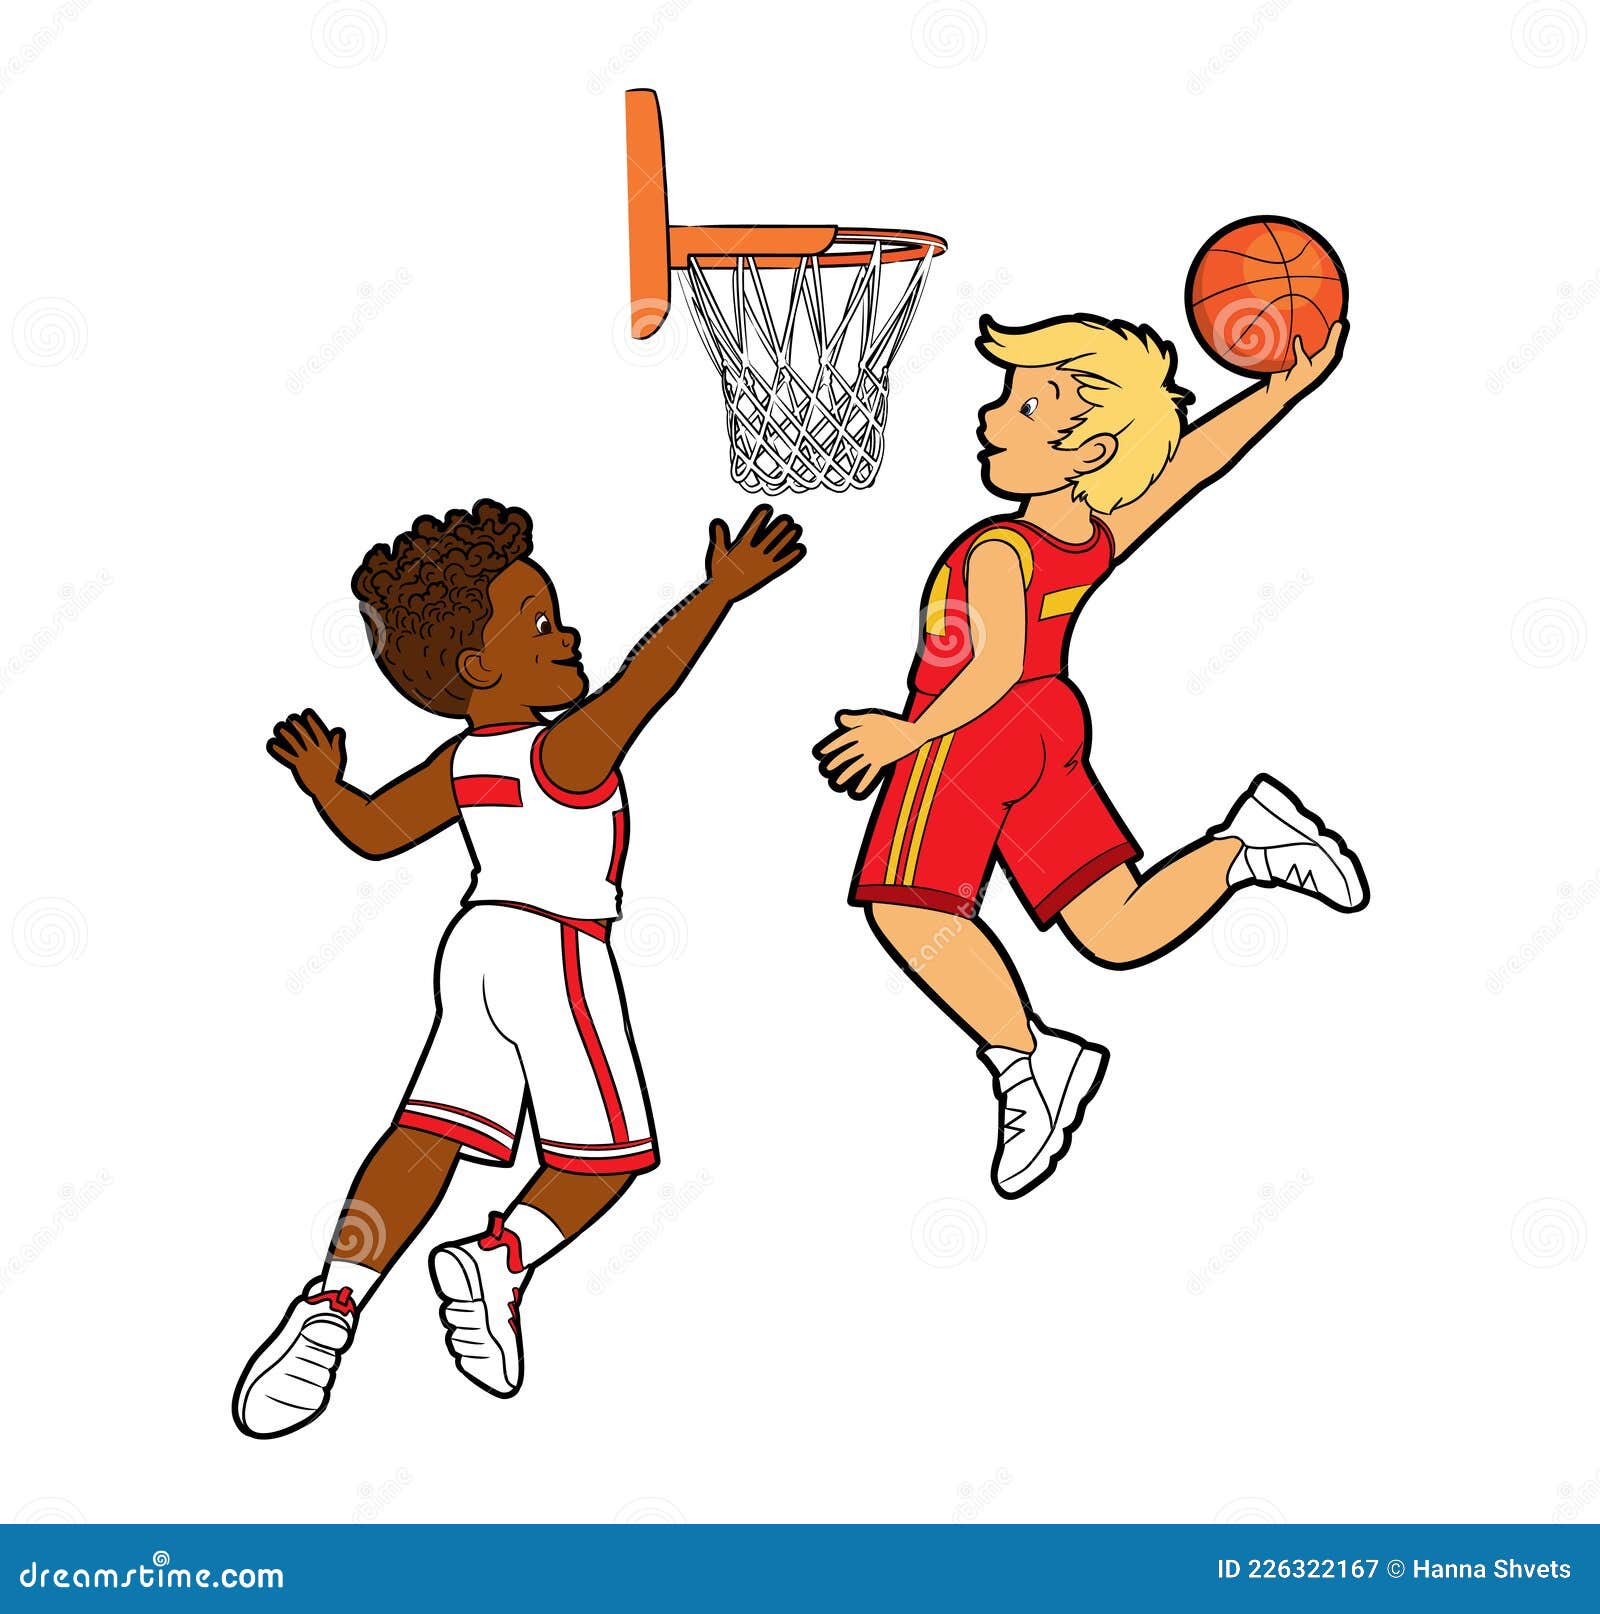 basketball player drawing